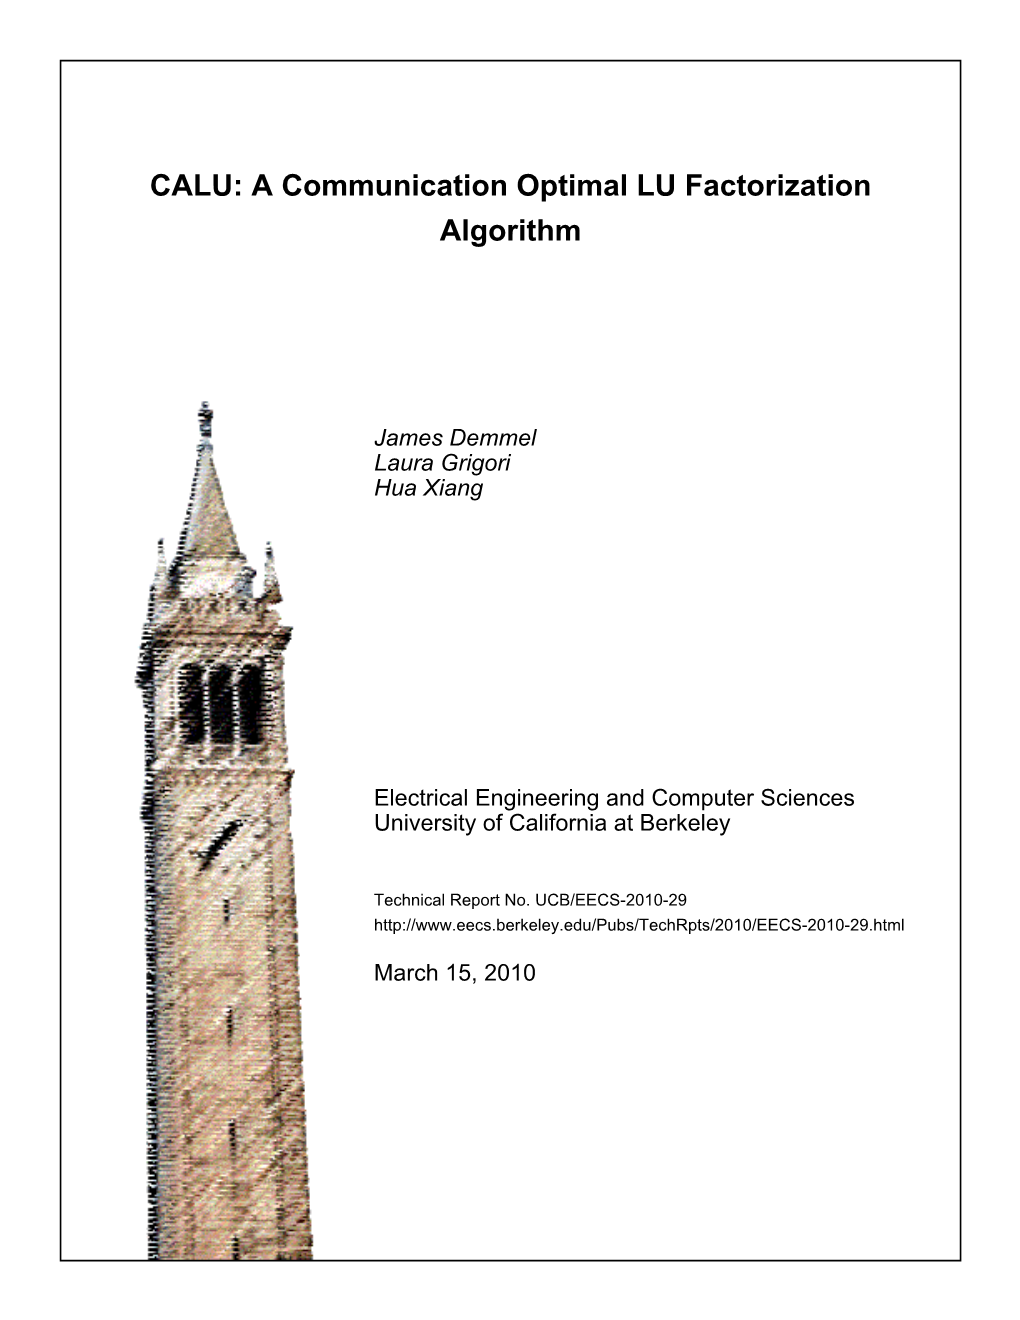 CALU: a Communication Optimal LU Factorization Algorithm